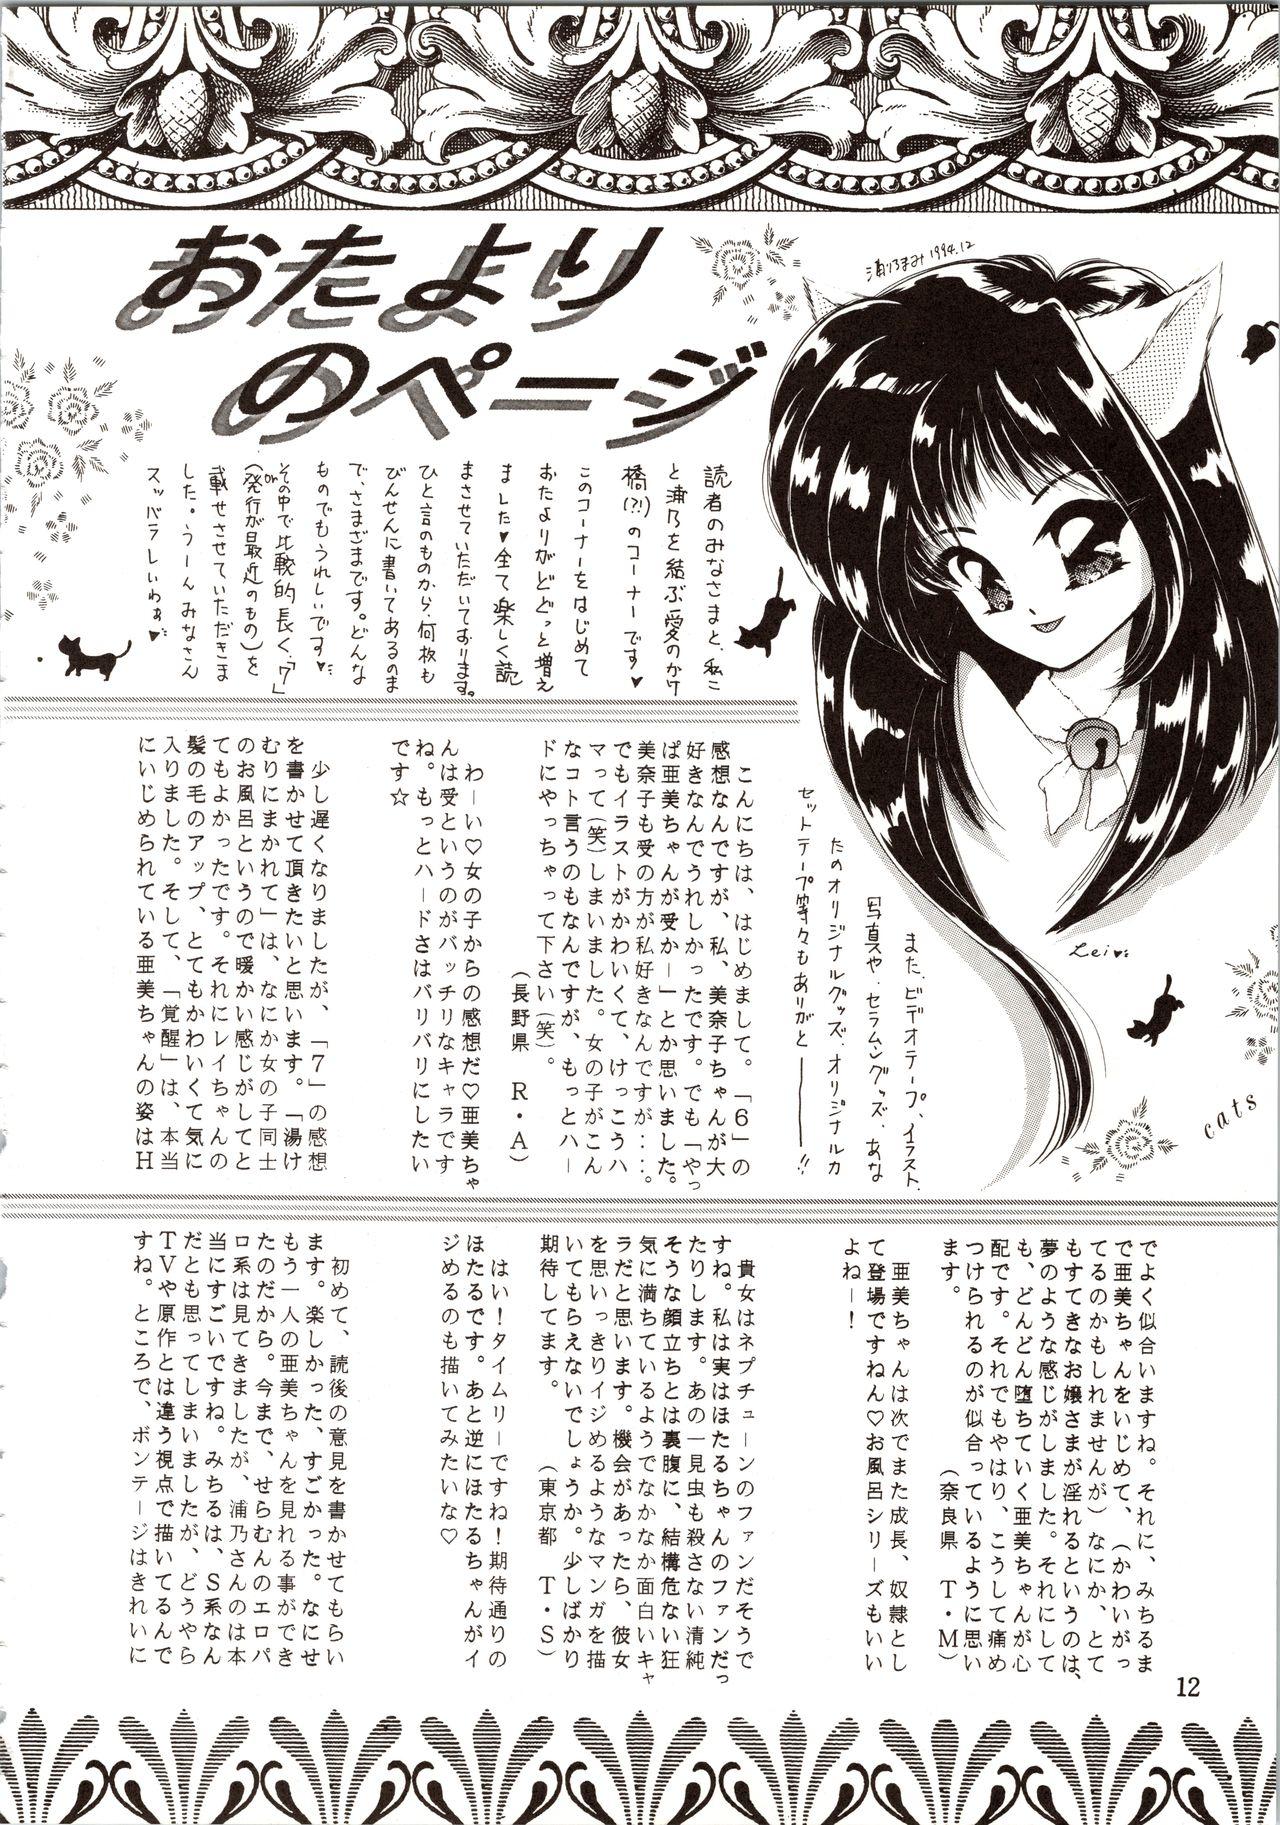 Bathroom Tsukiyo no Tawamure 8 - Sailor moon Legs - Page 12